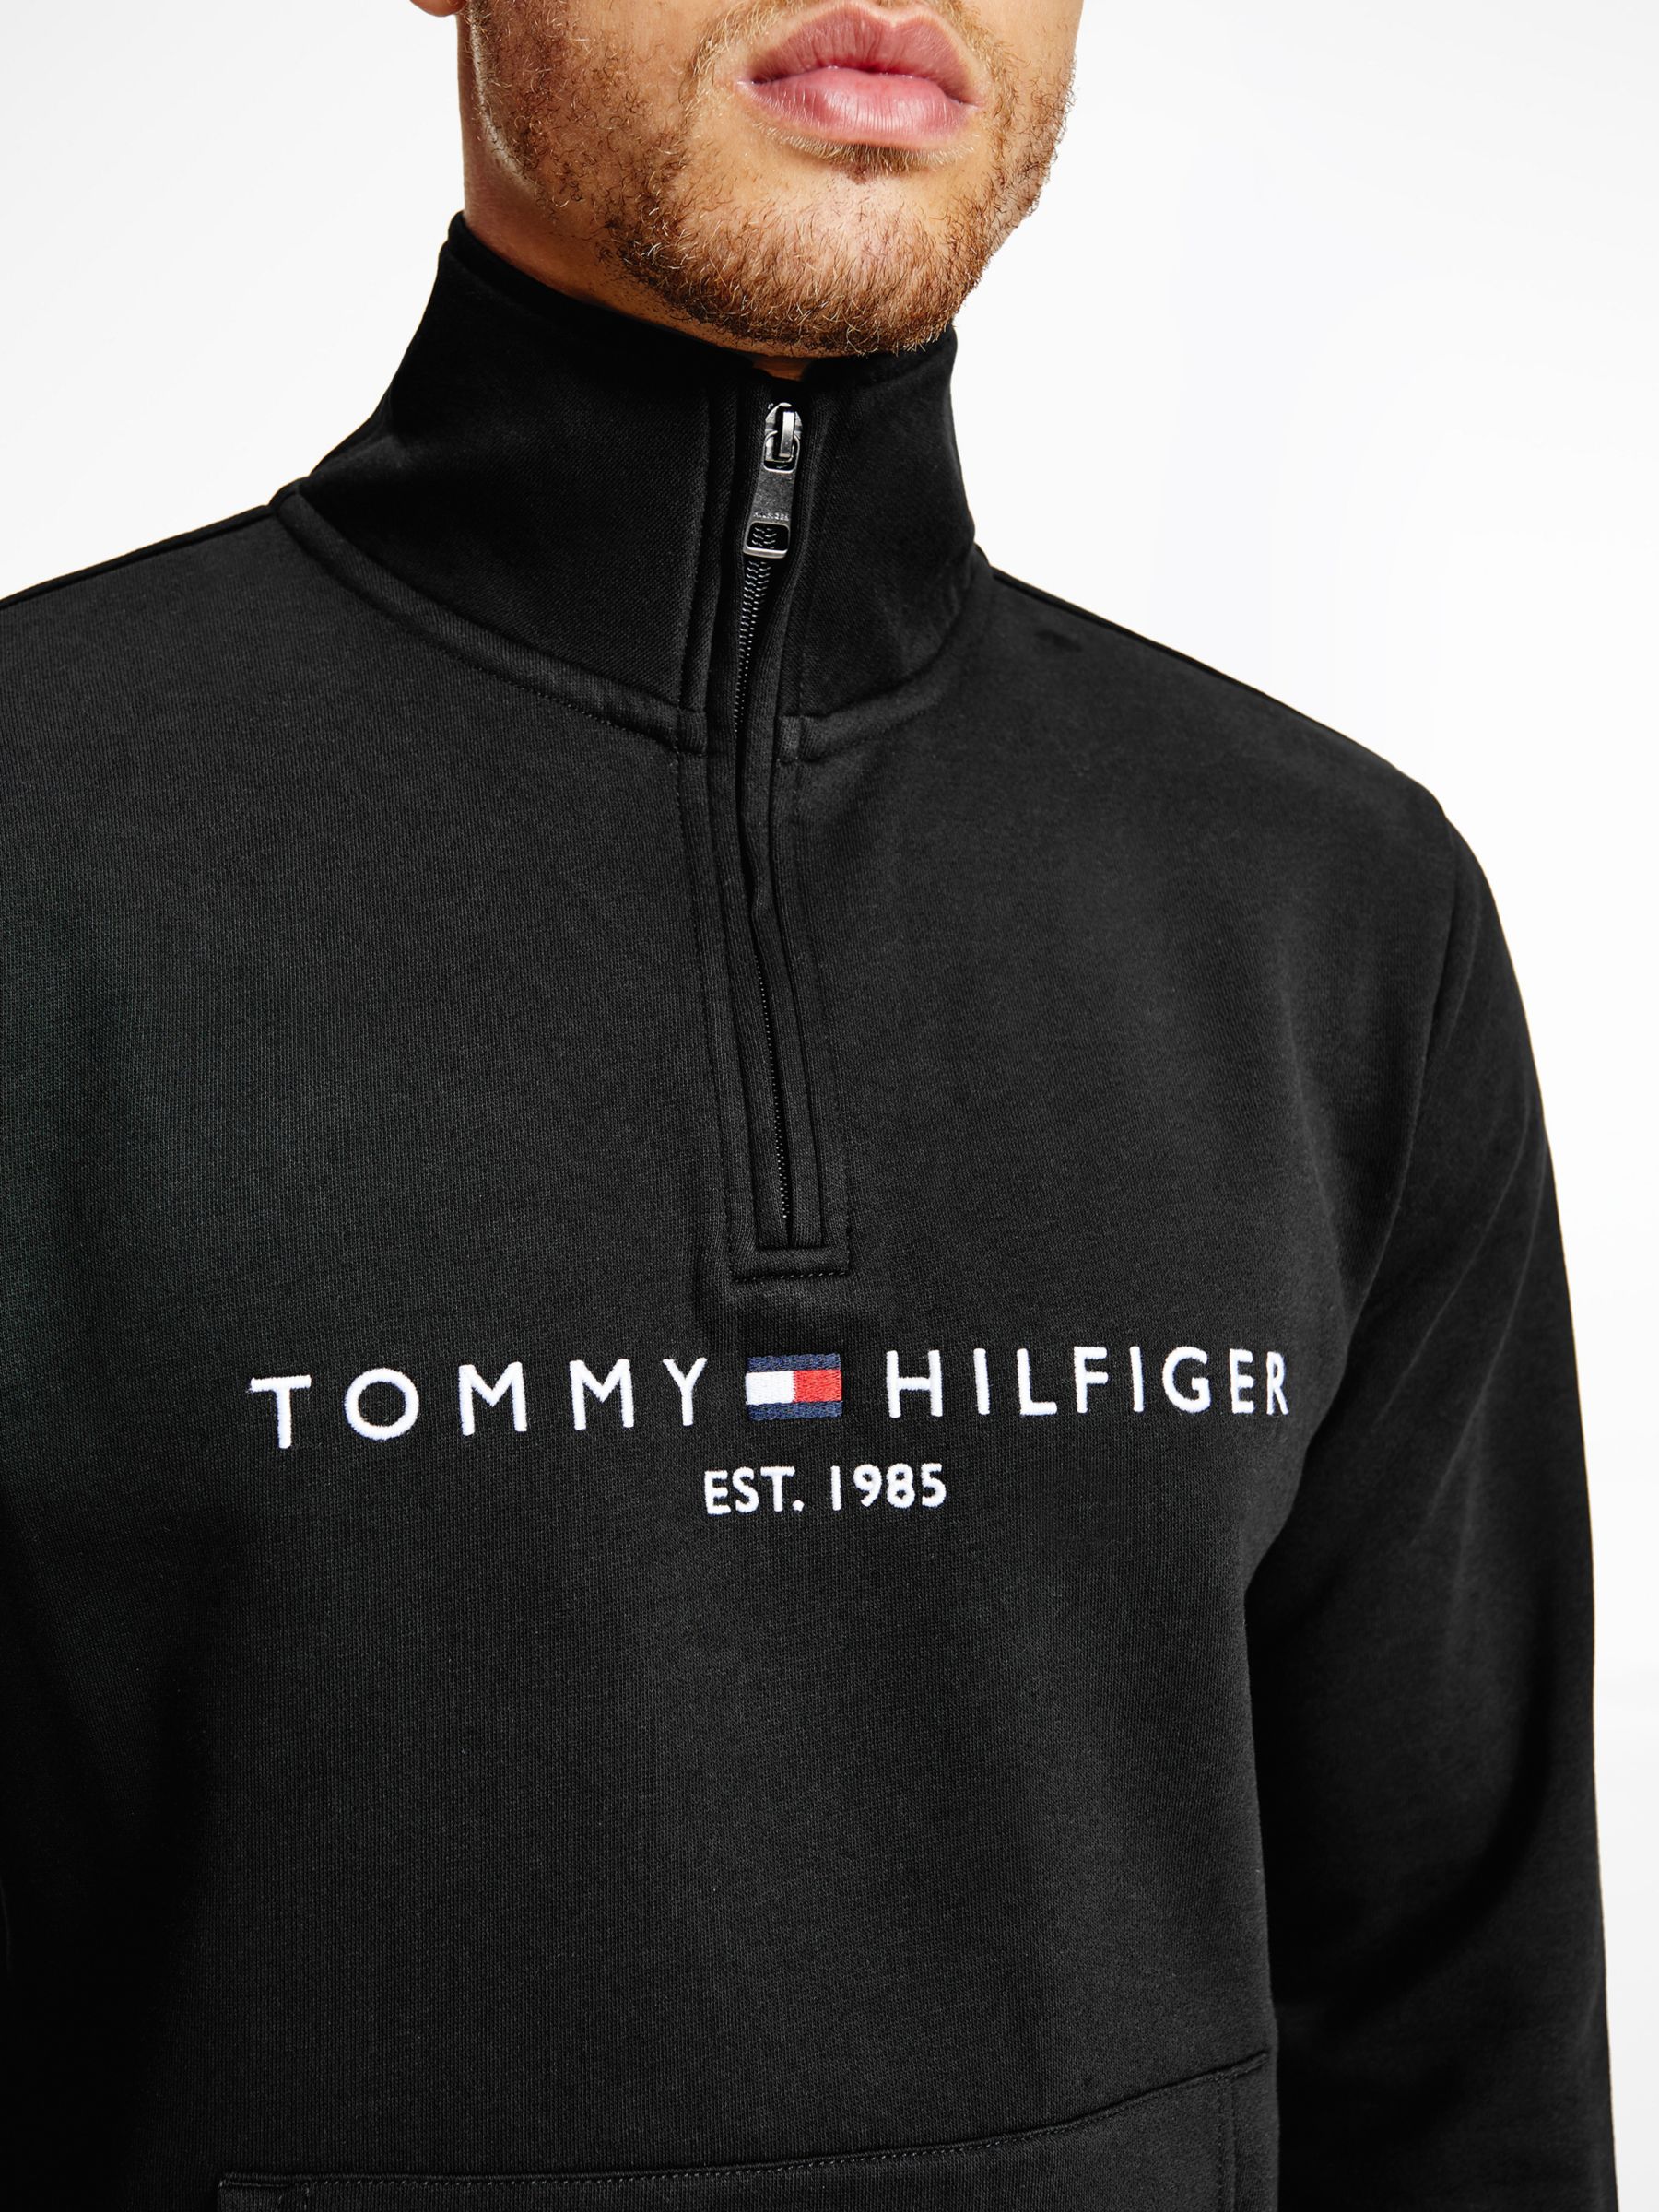 Tommy Hilfiger Mock Neck Sweatshirt, Black, S